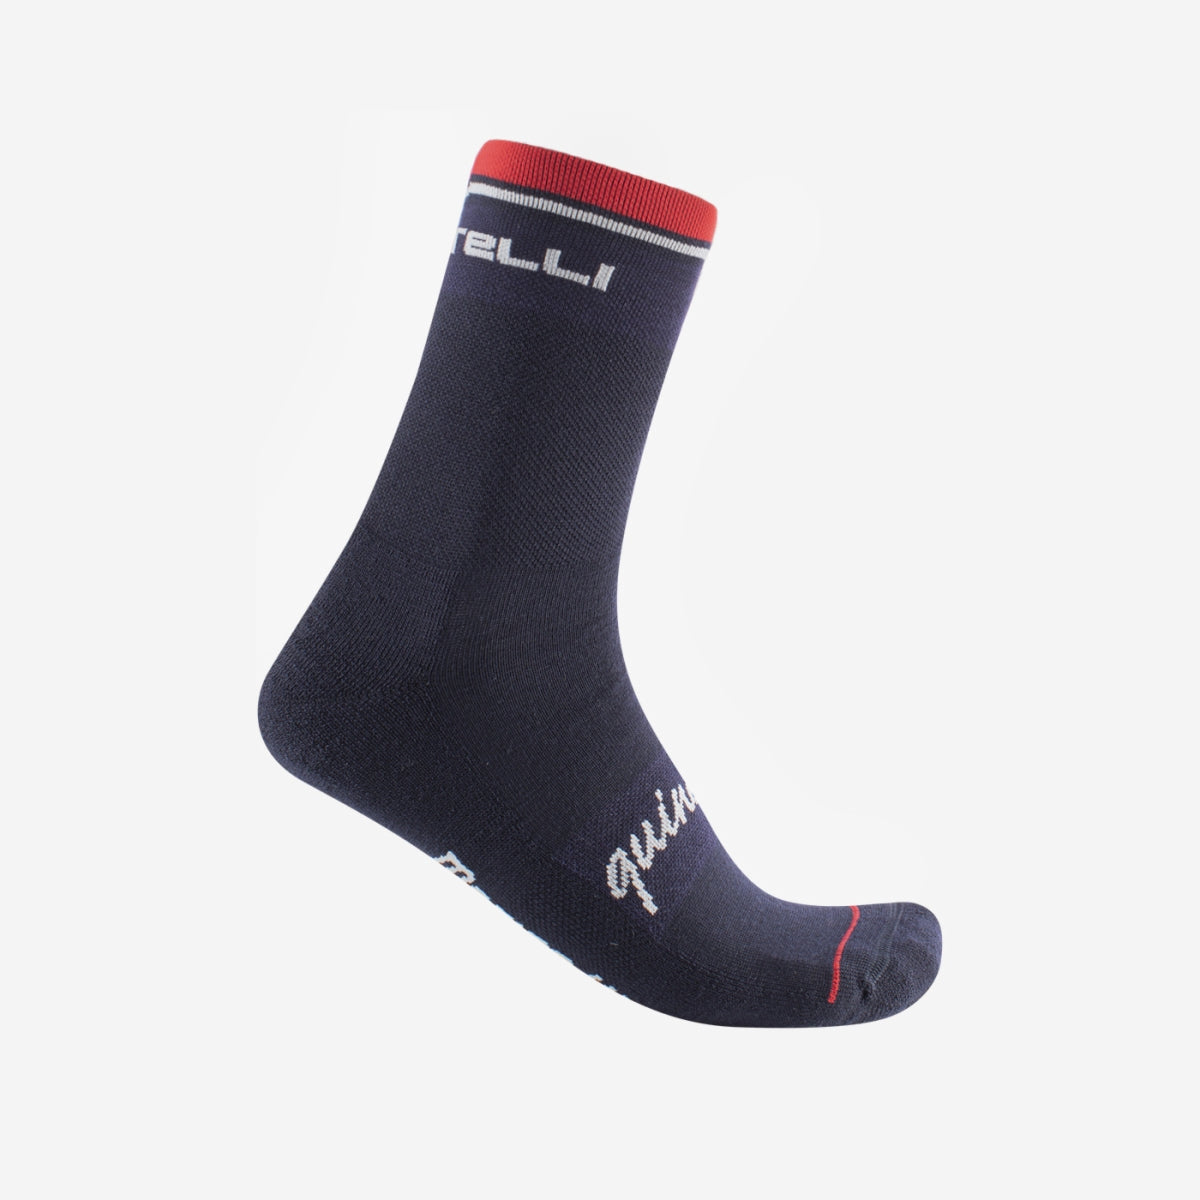 Castelli Diecici Soft Merino socks